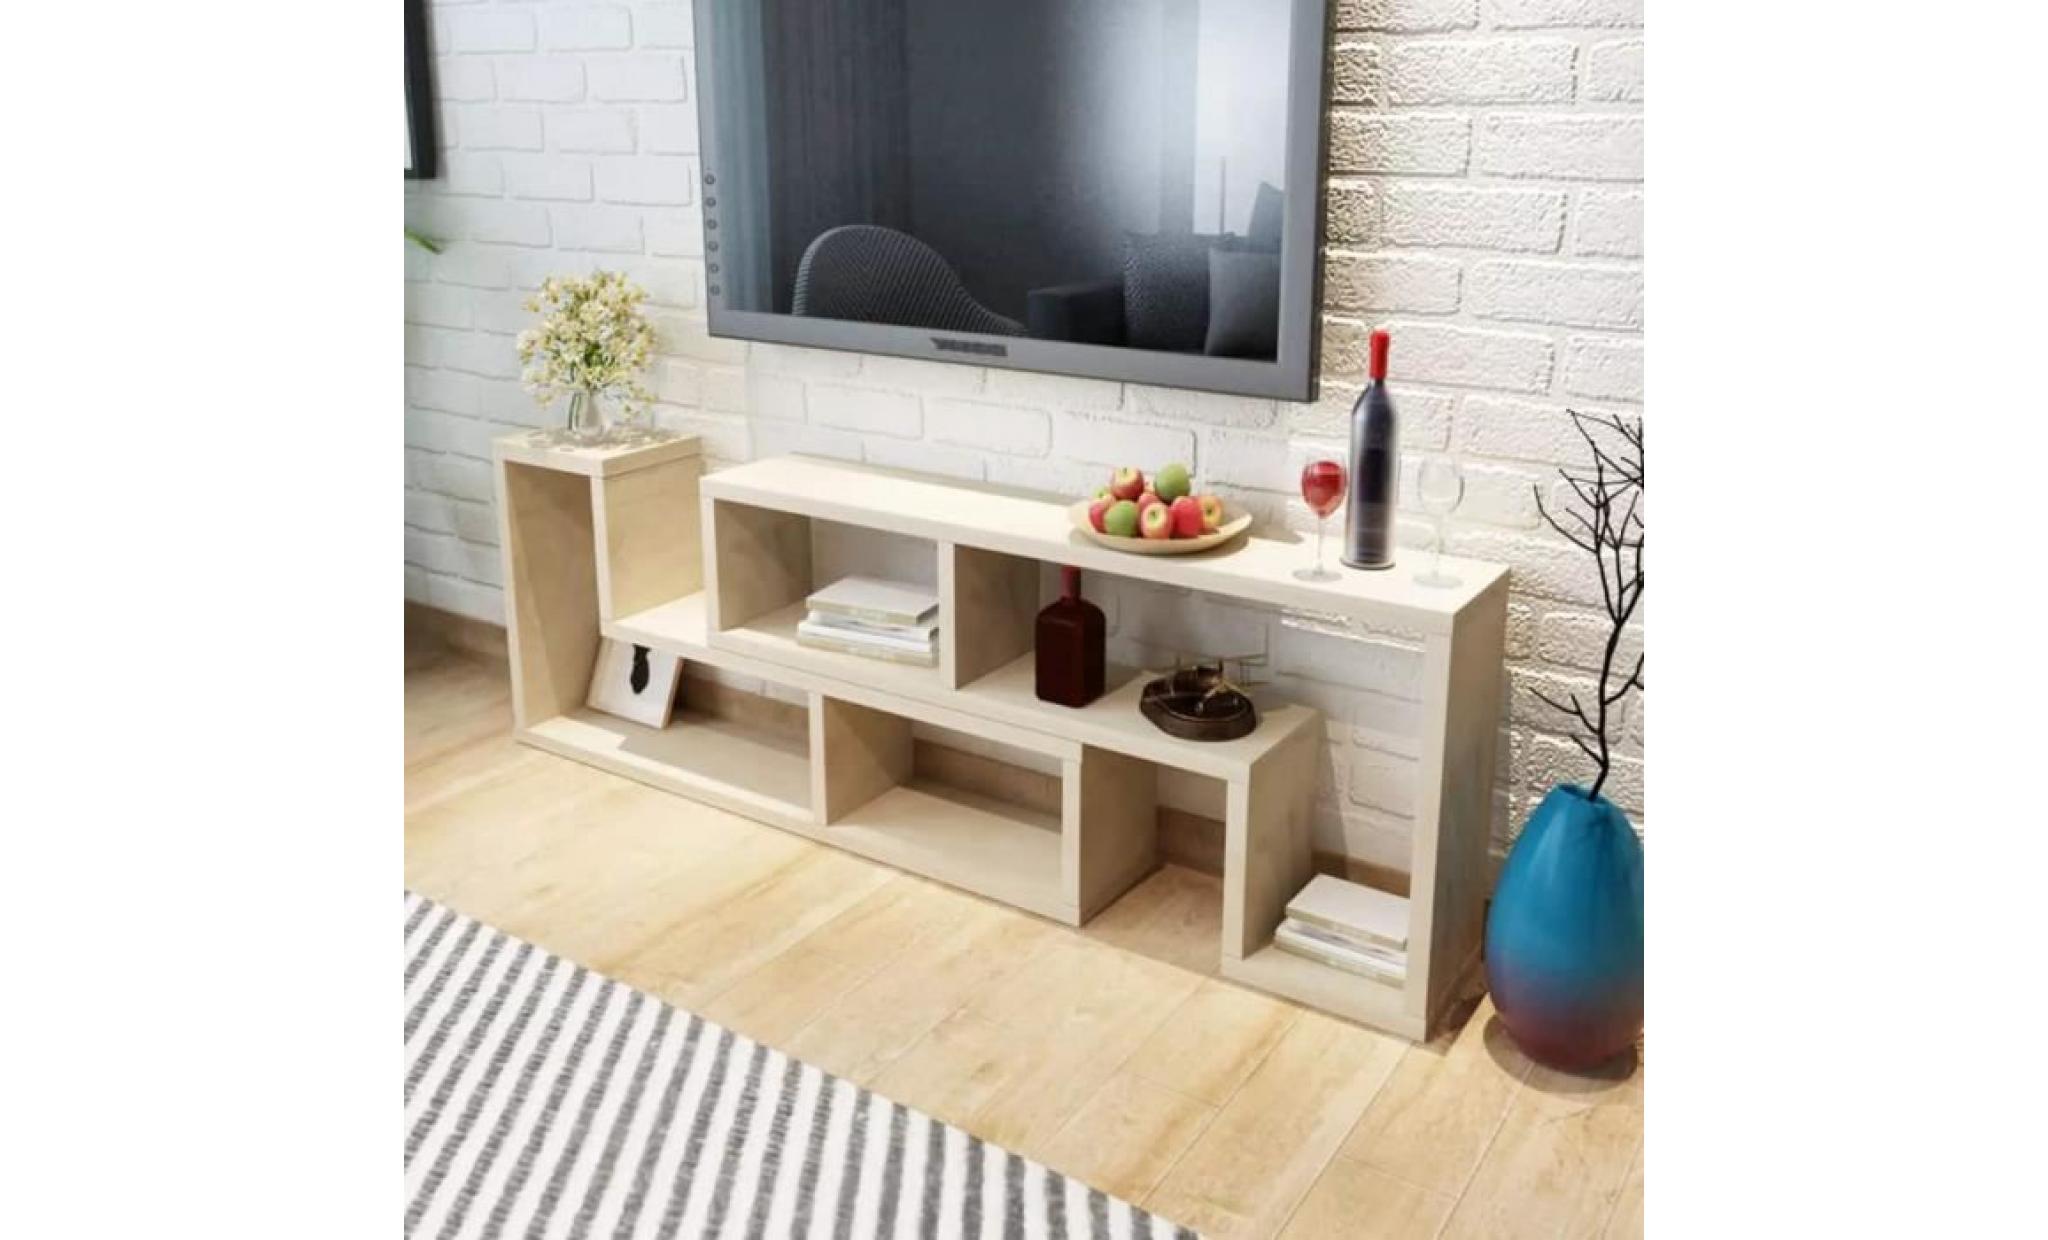 meuble tv double en forme de l   chêne   en bois   style minimaliste   style moderne